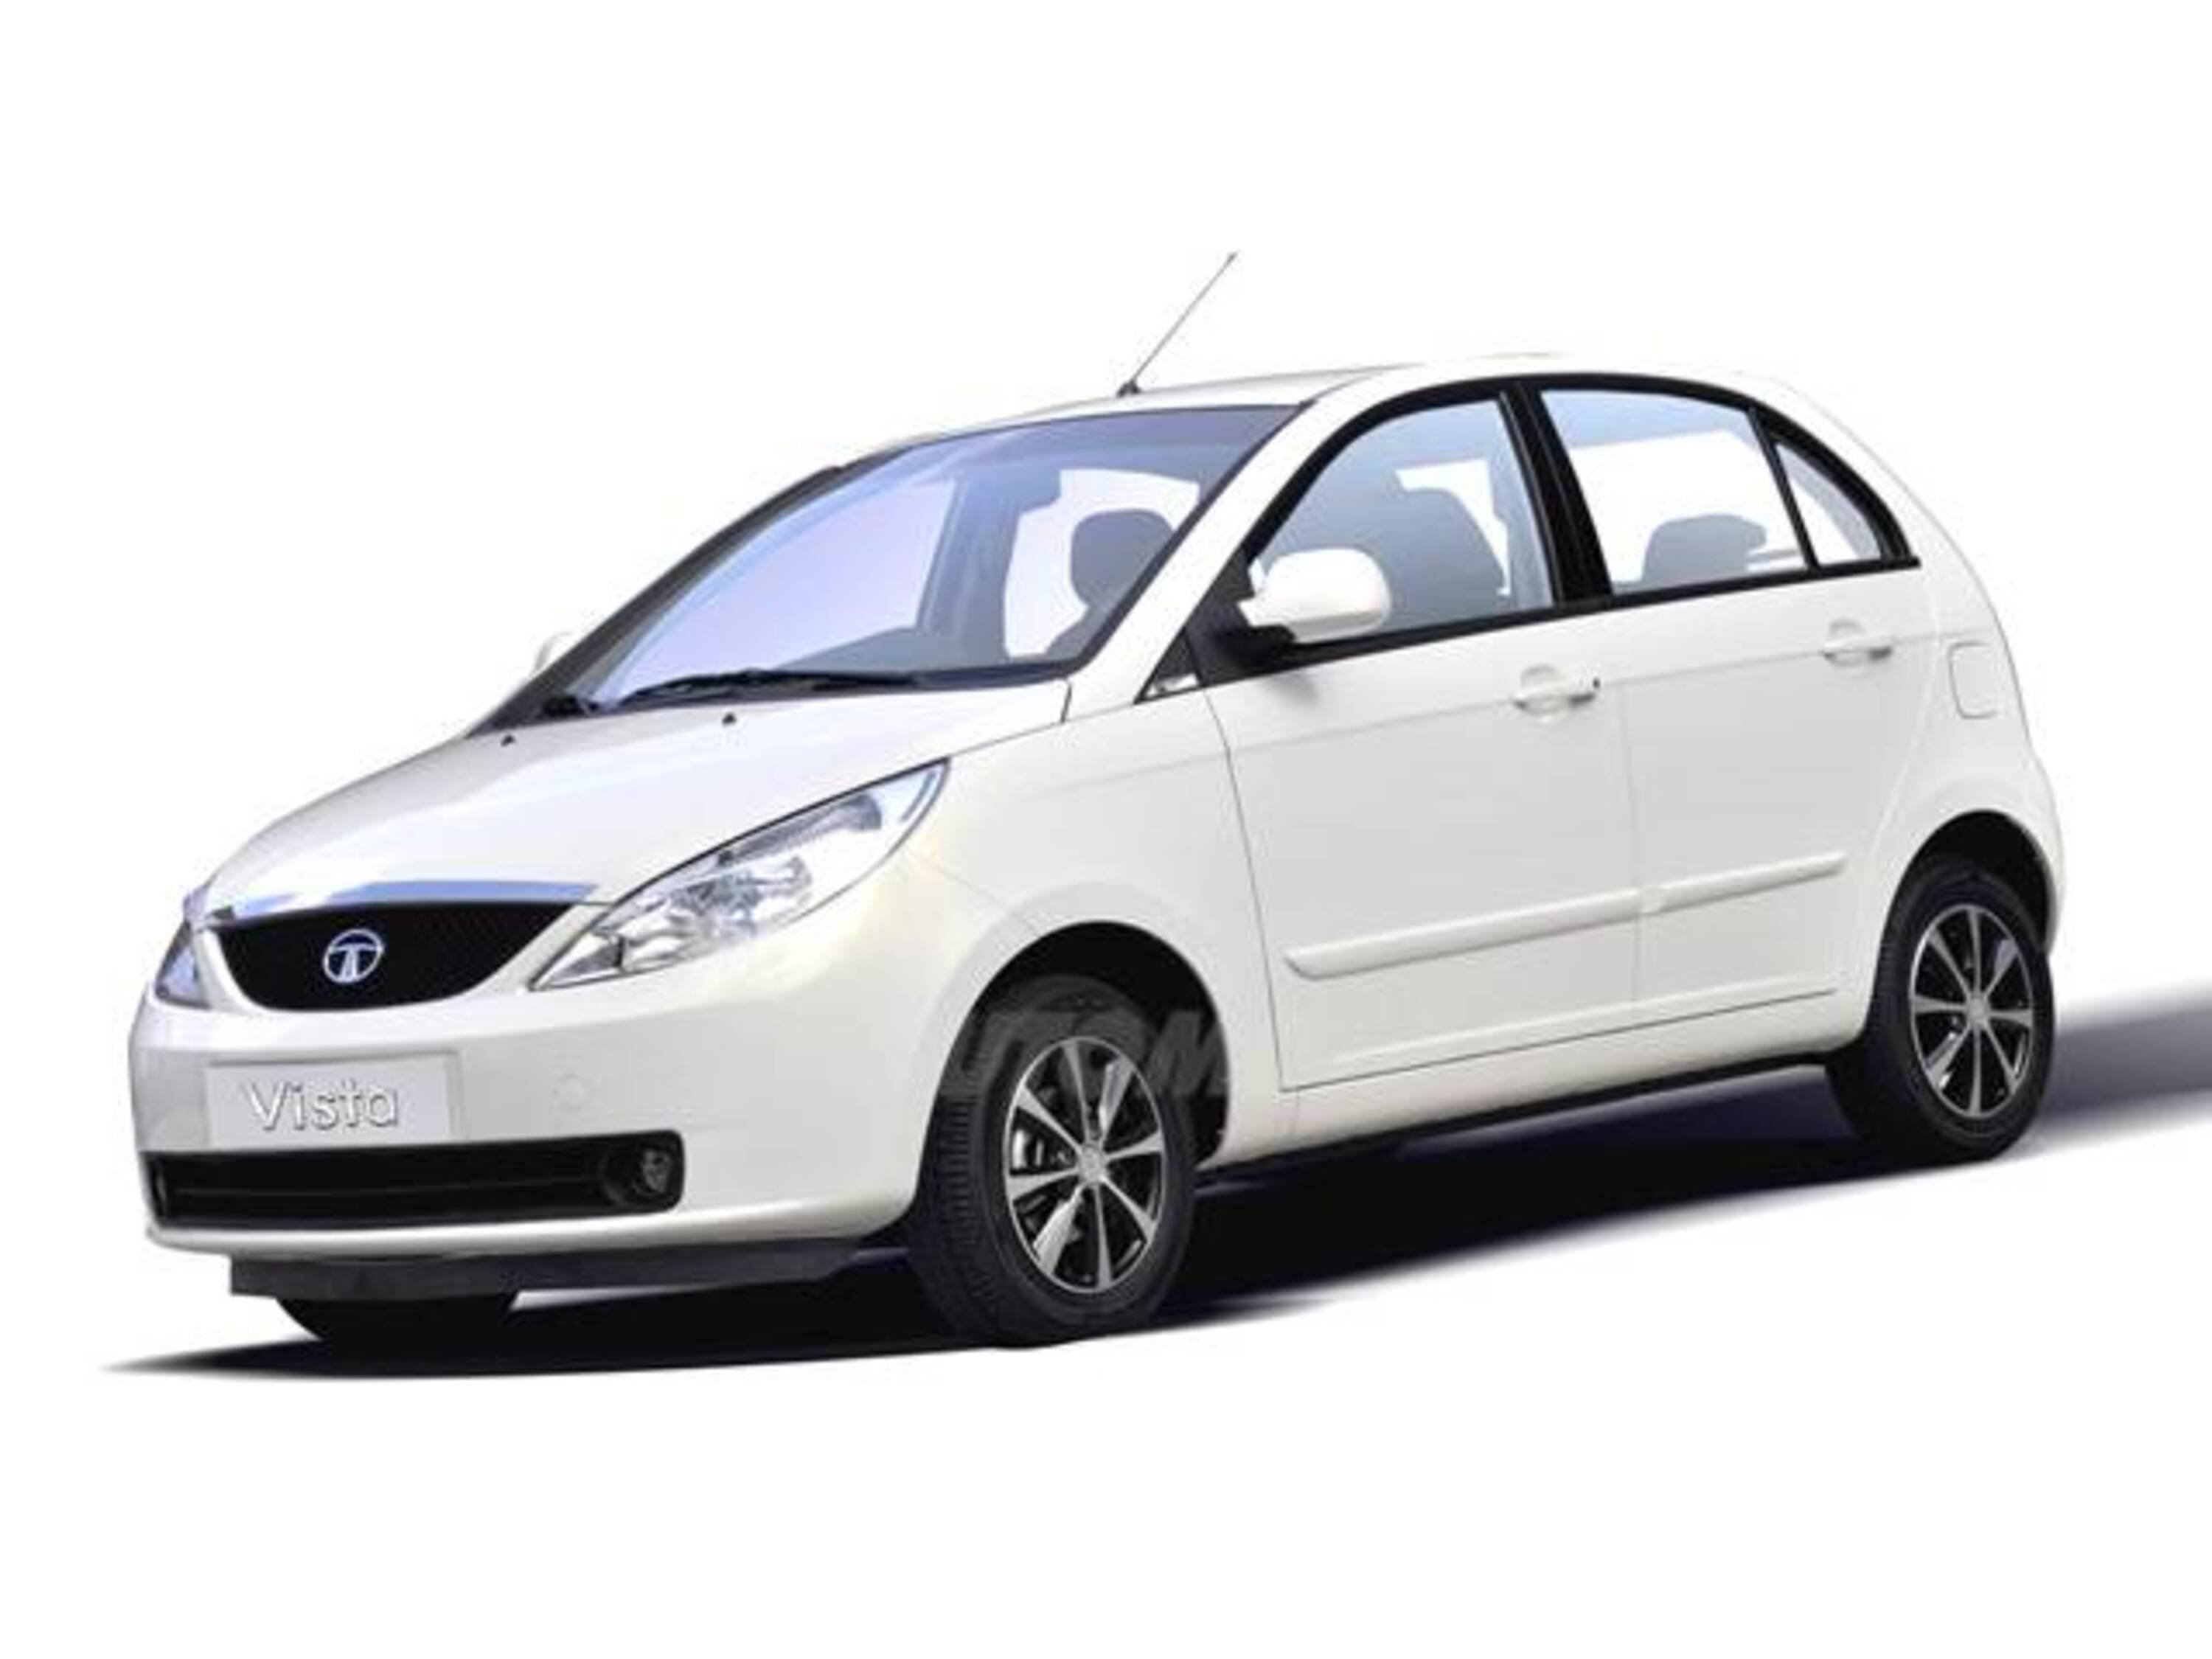 Tata Indica Vista 1.4 Safire Bi Fuel (Metano) LX 5p.